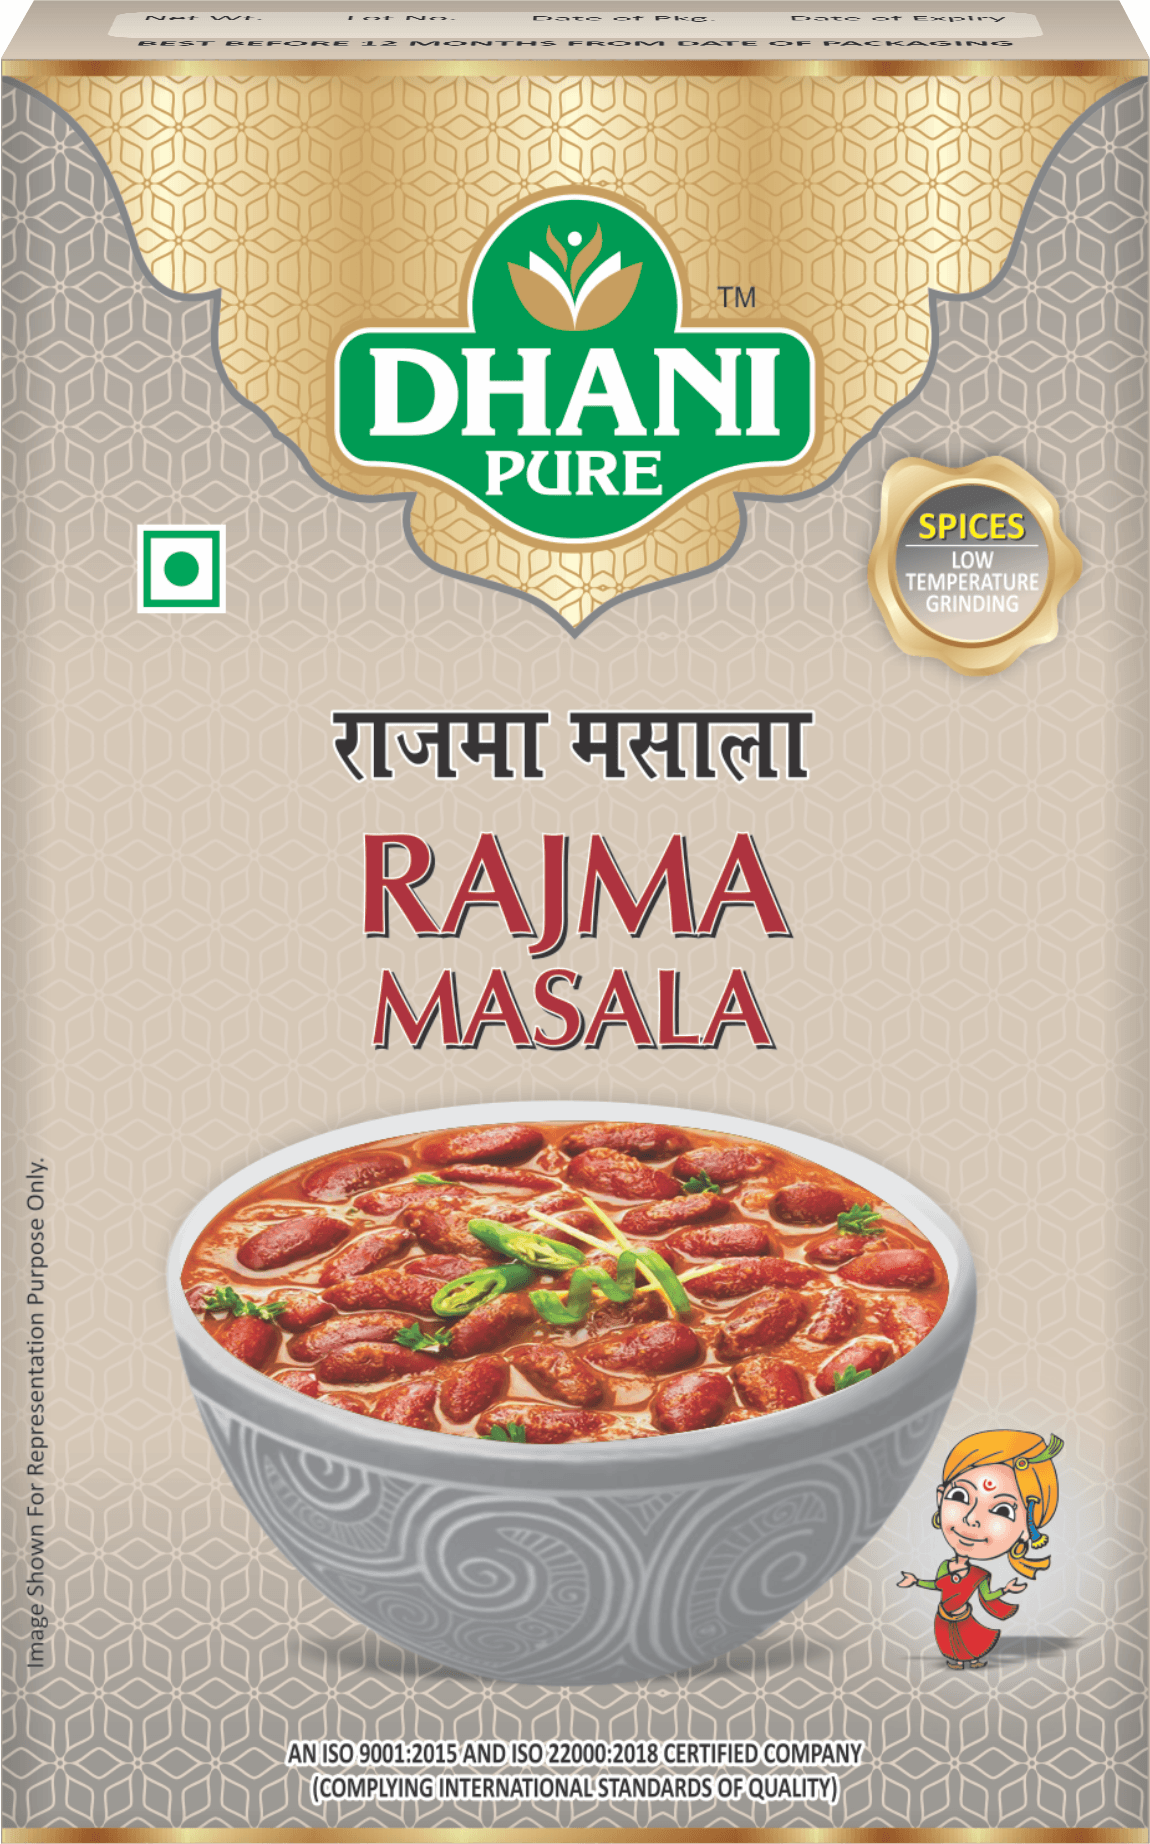 Rajma Masala - Dhani Pure Spices